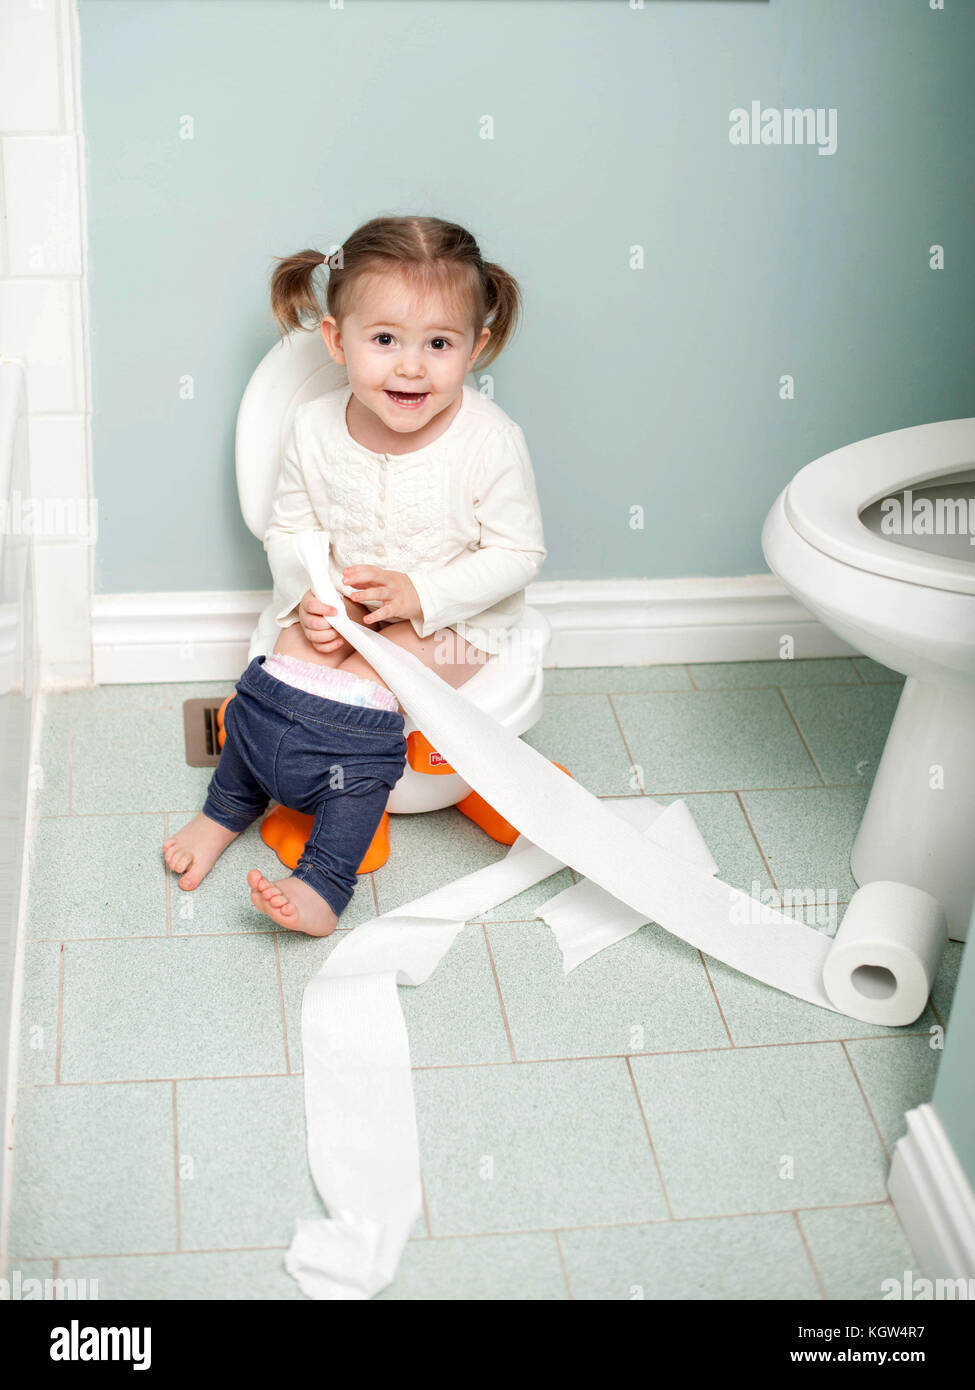 Toddler girl potty training holding toilet paper in bathroom Stock Photo